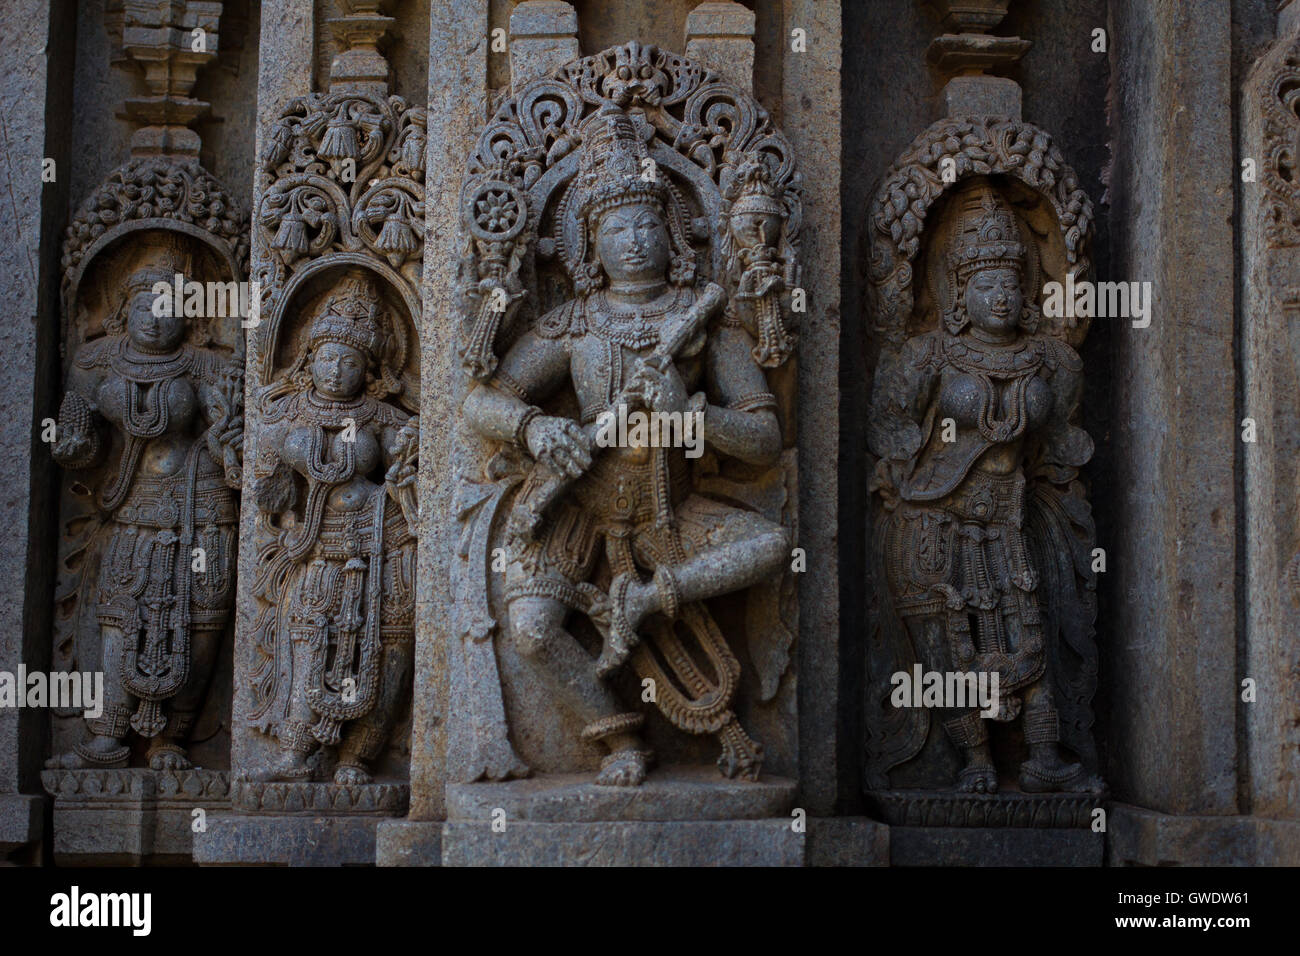 Image du dieu hindou Krishna jouant de la flûte dans Chennakesava temple, Somanathapura,Karnataka, Inde, Asie Banque D'Images